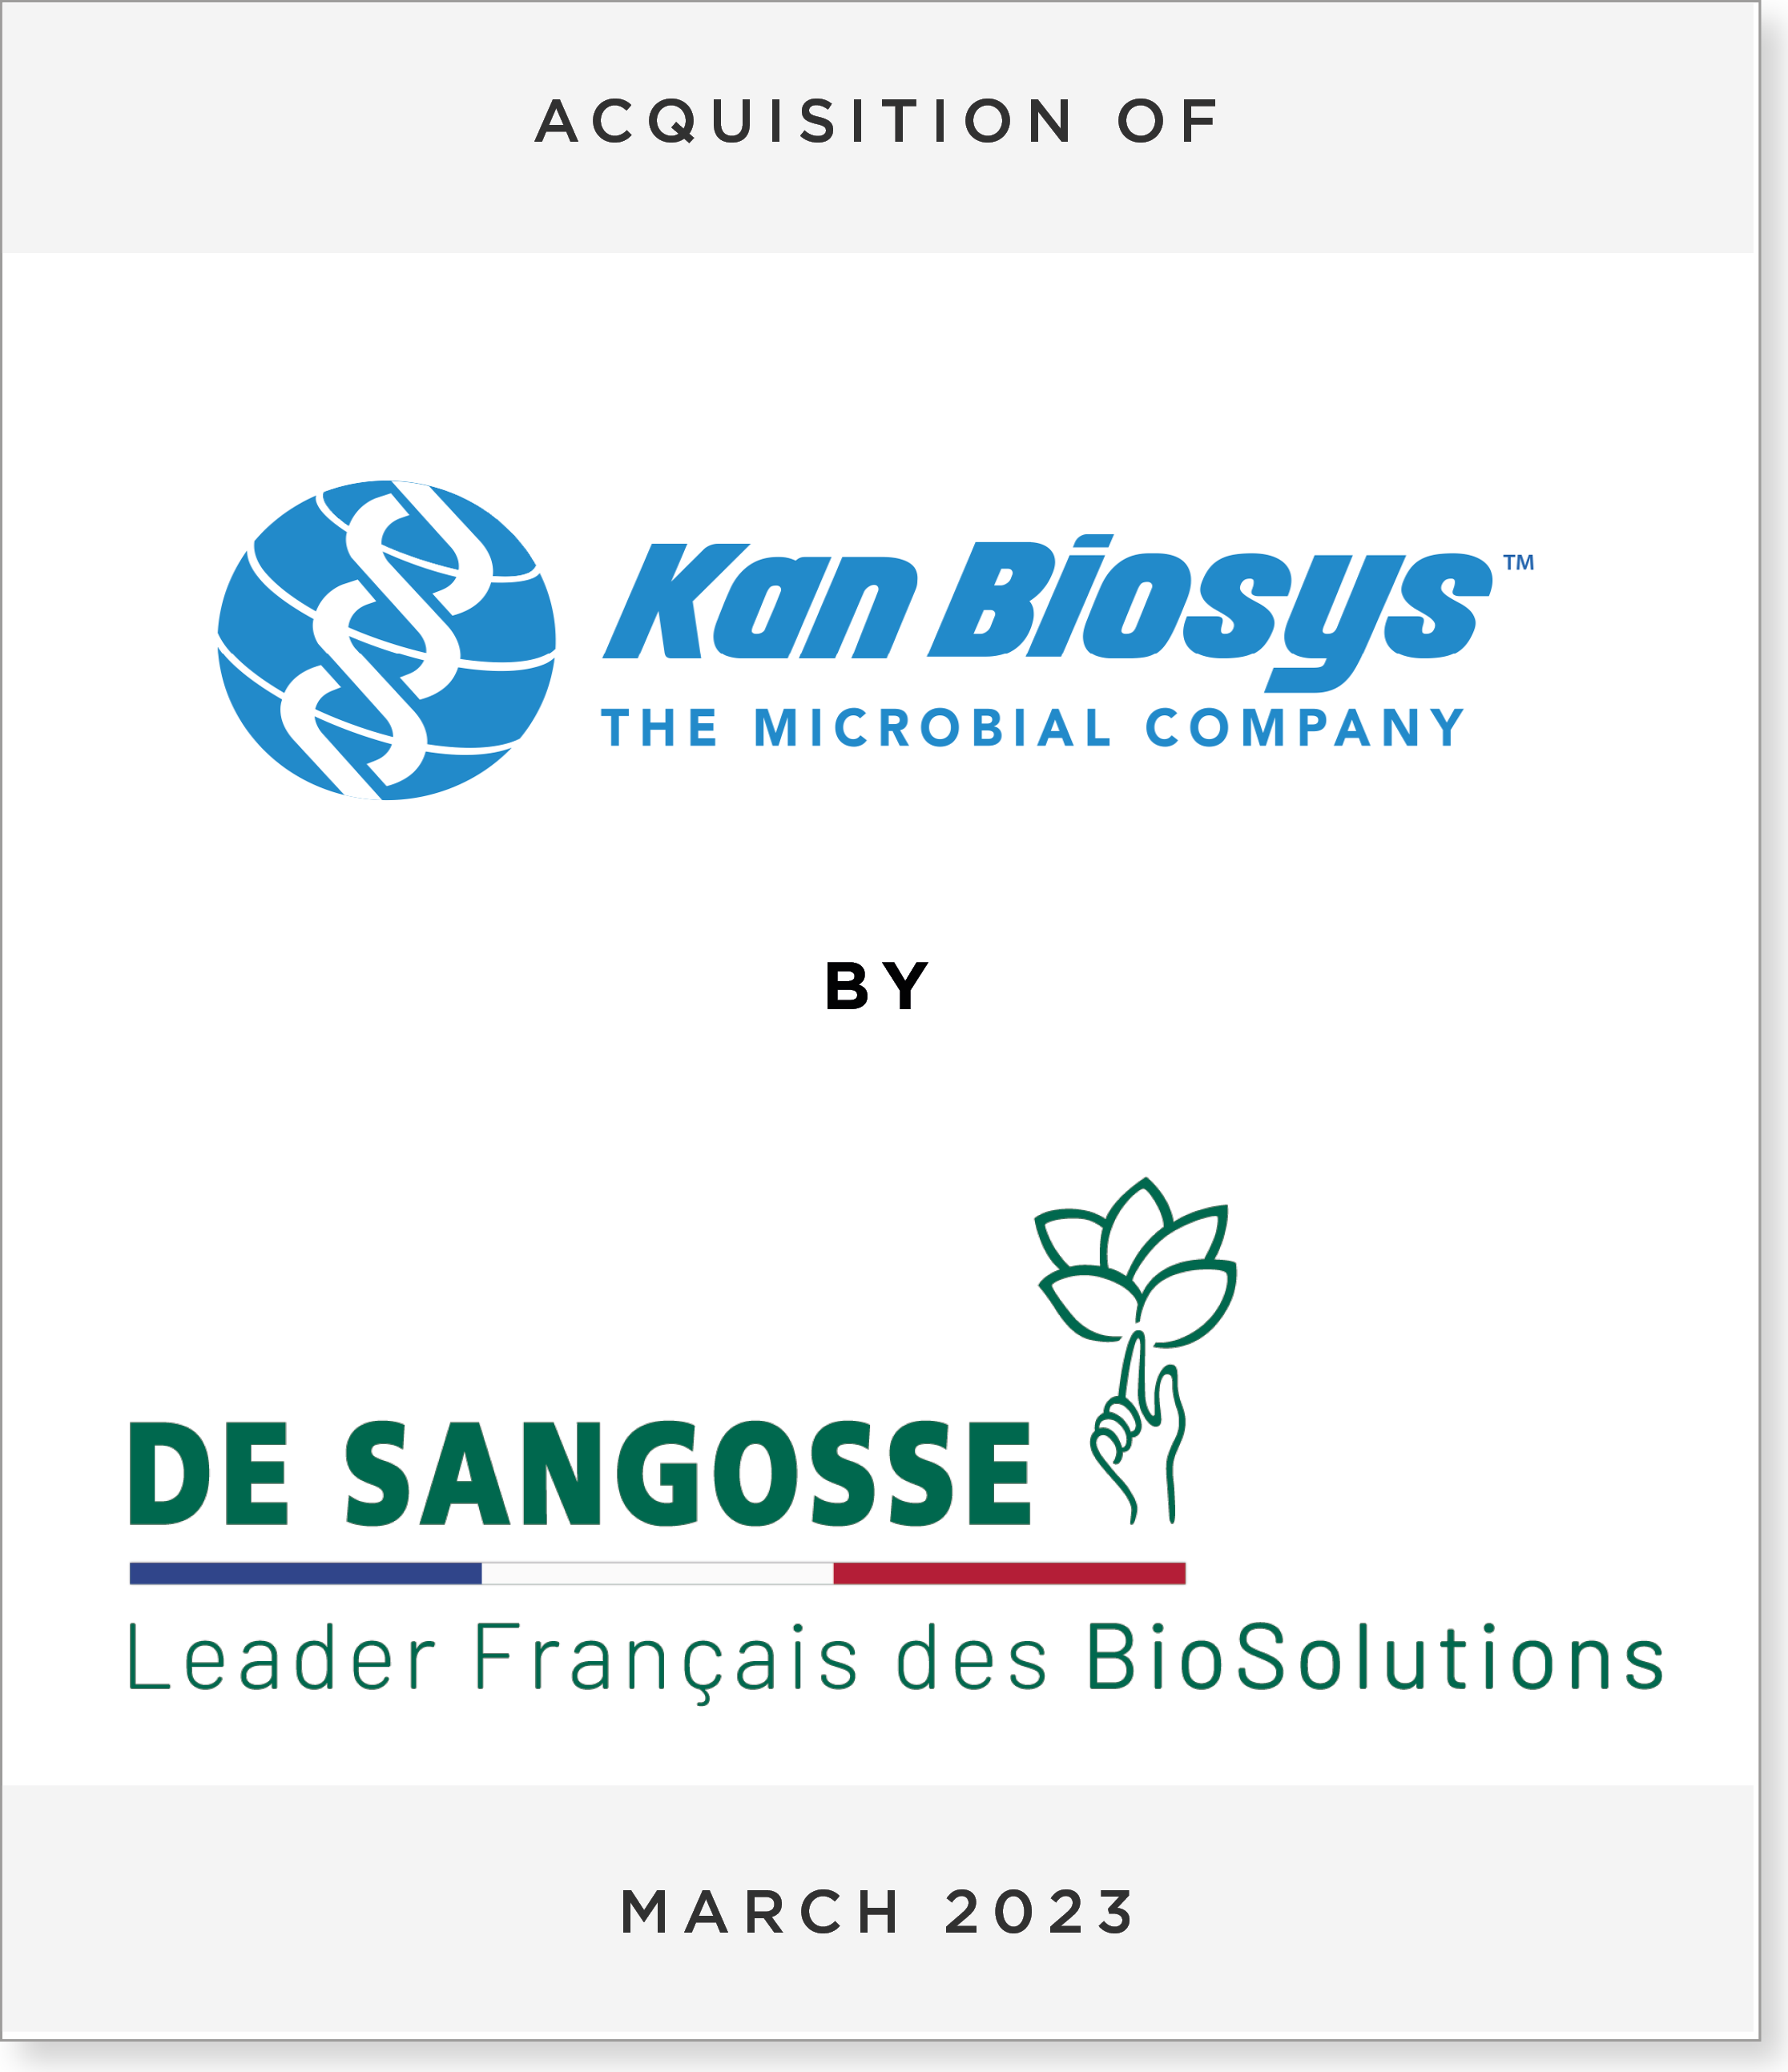 KanBiosis_DeSangosse-2 Acquisition of Kan Biosys by De Sangosse